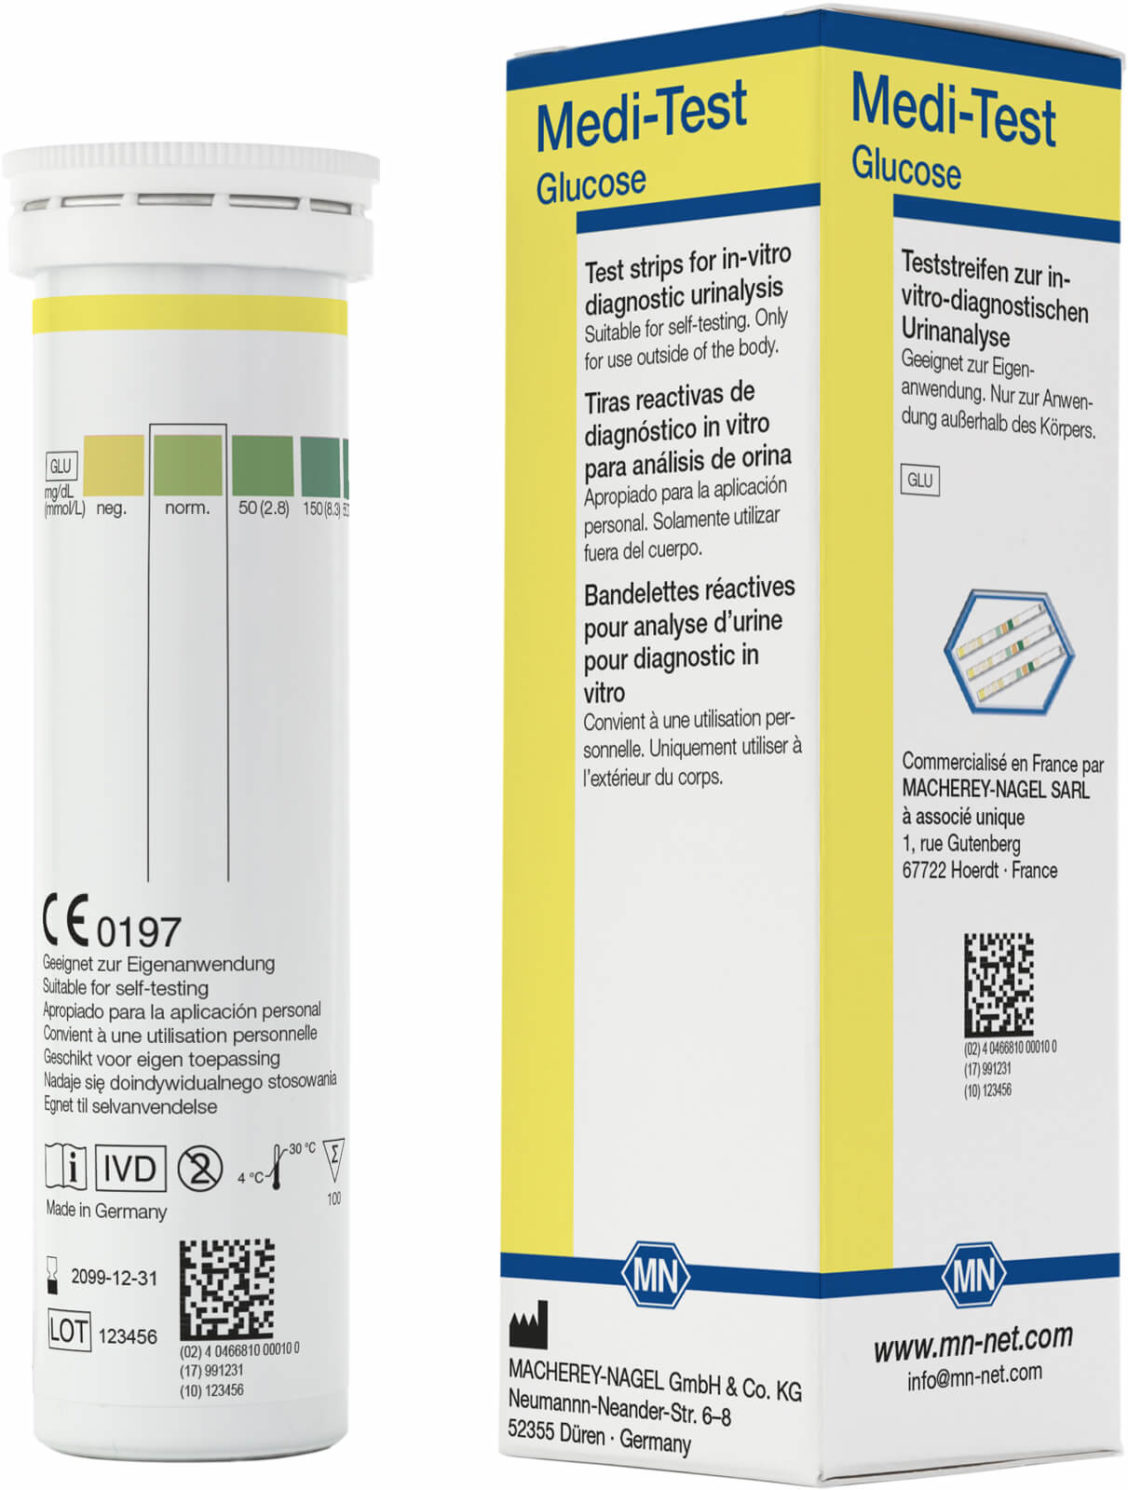 M&N 93024 Medi-Test Glukose 100 tester